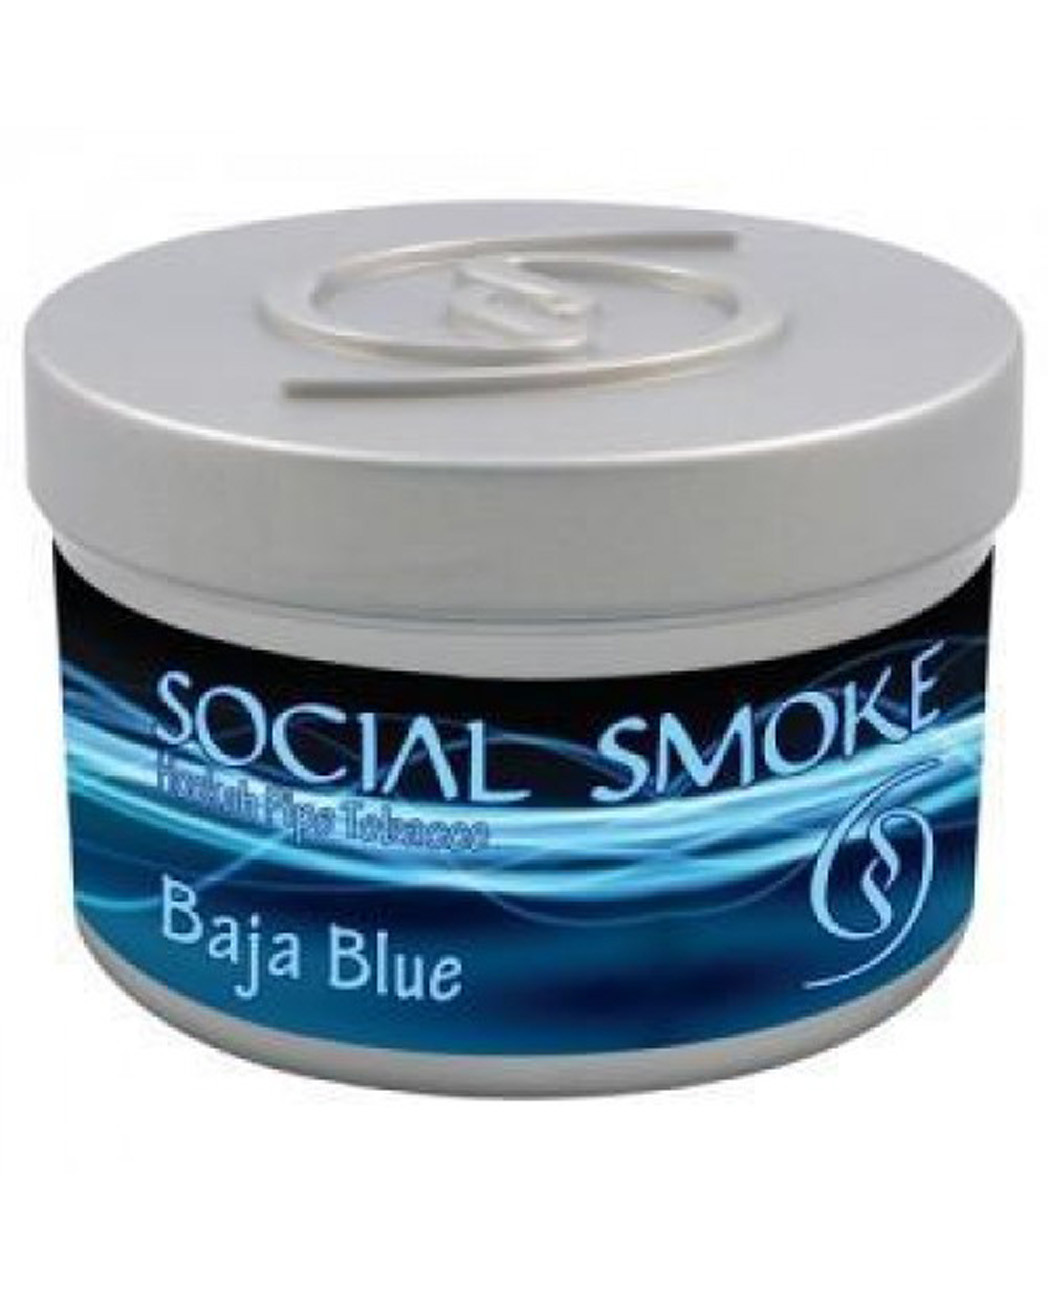 Baja Blue